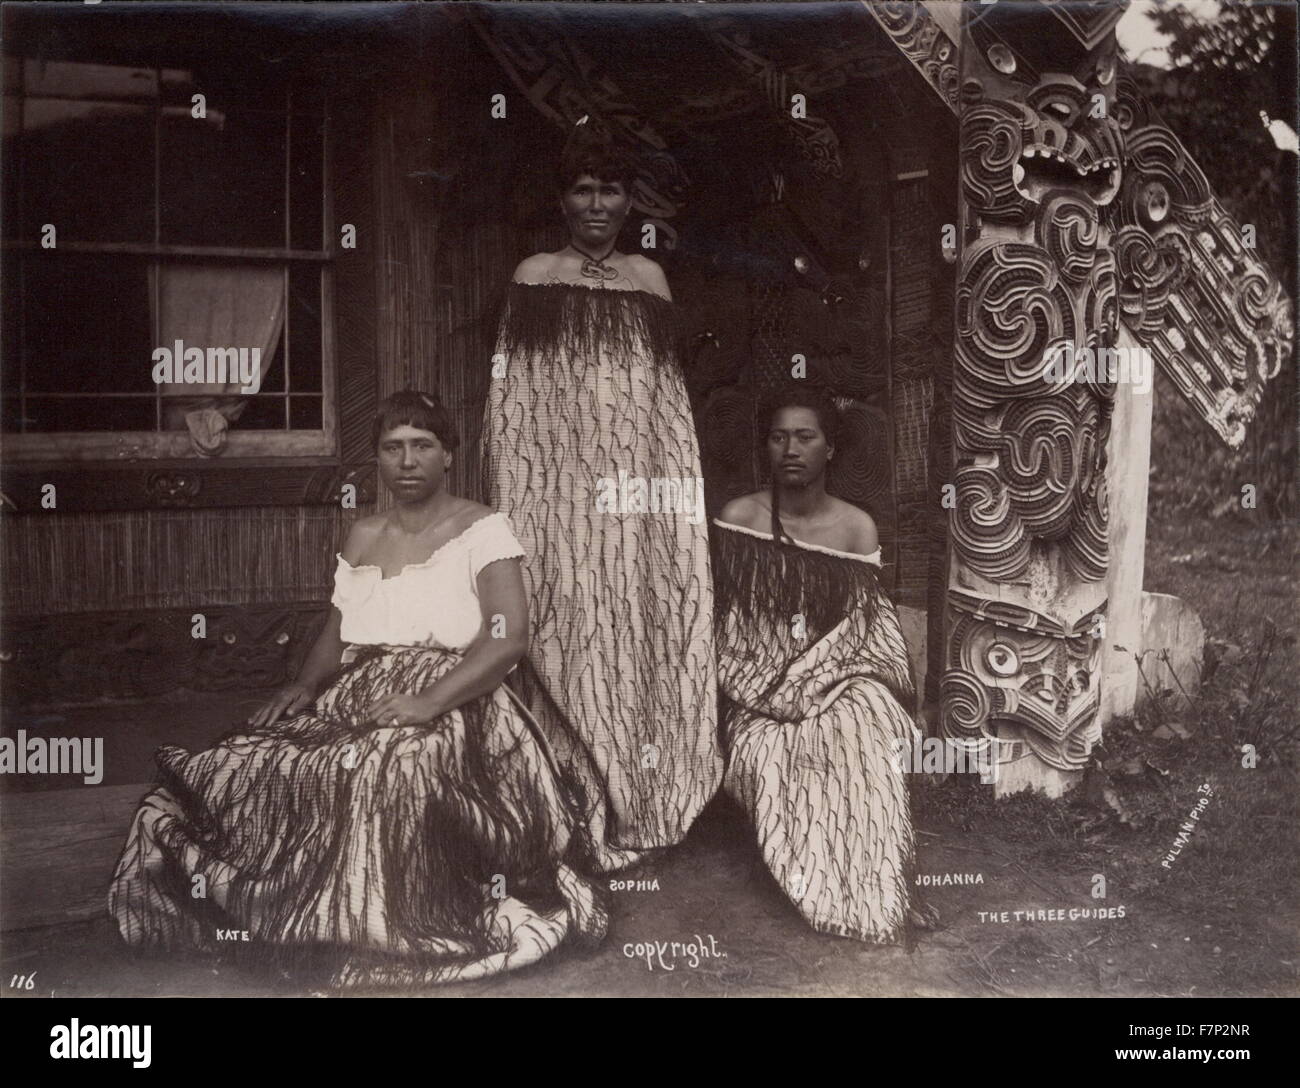 Guide Kate, Sophia, Johanna (ragazze Maori), fotografata da Elizabeth pulman (1836-1900) uno della Nuova Zelanda dei primi fotografi. 1889 Foto Stock